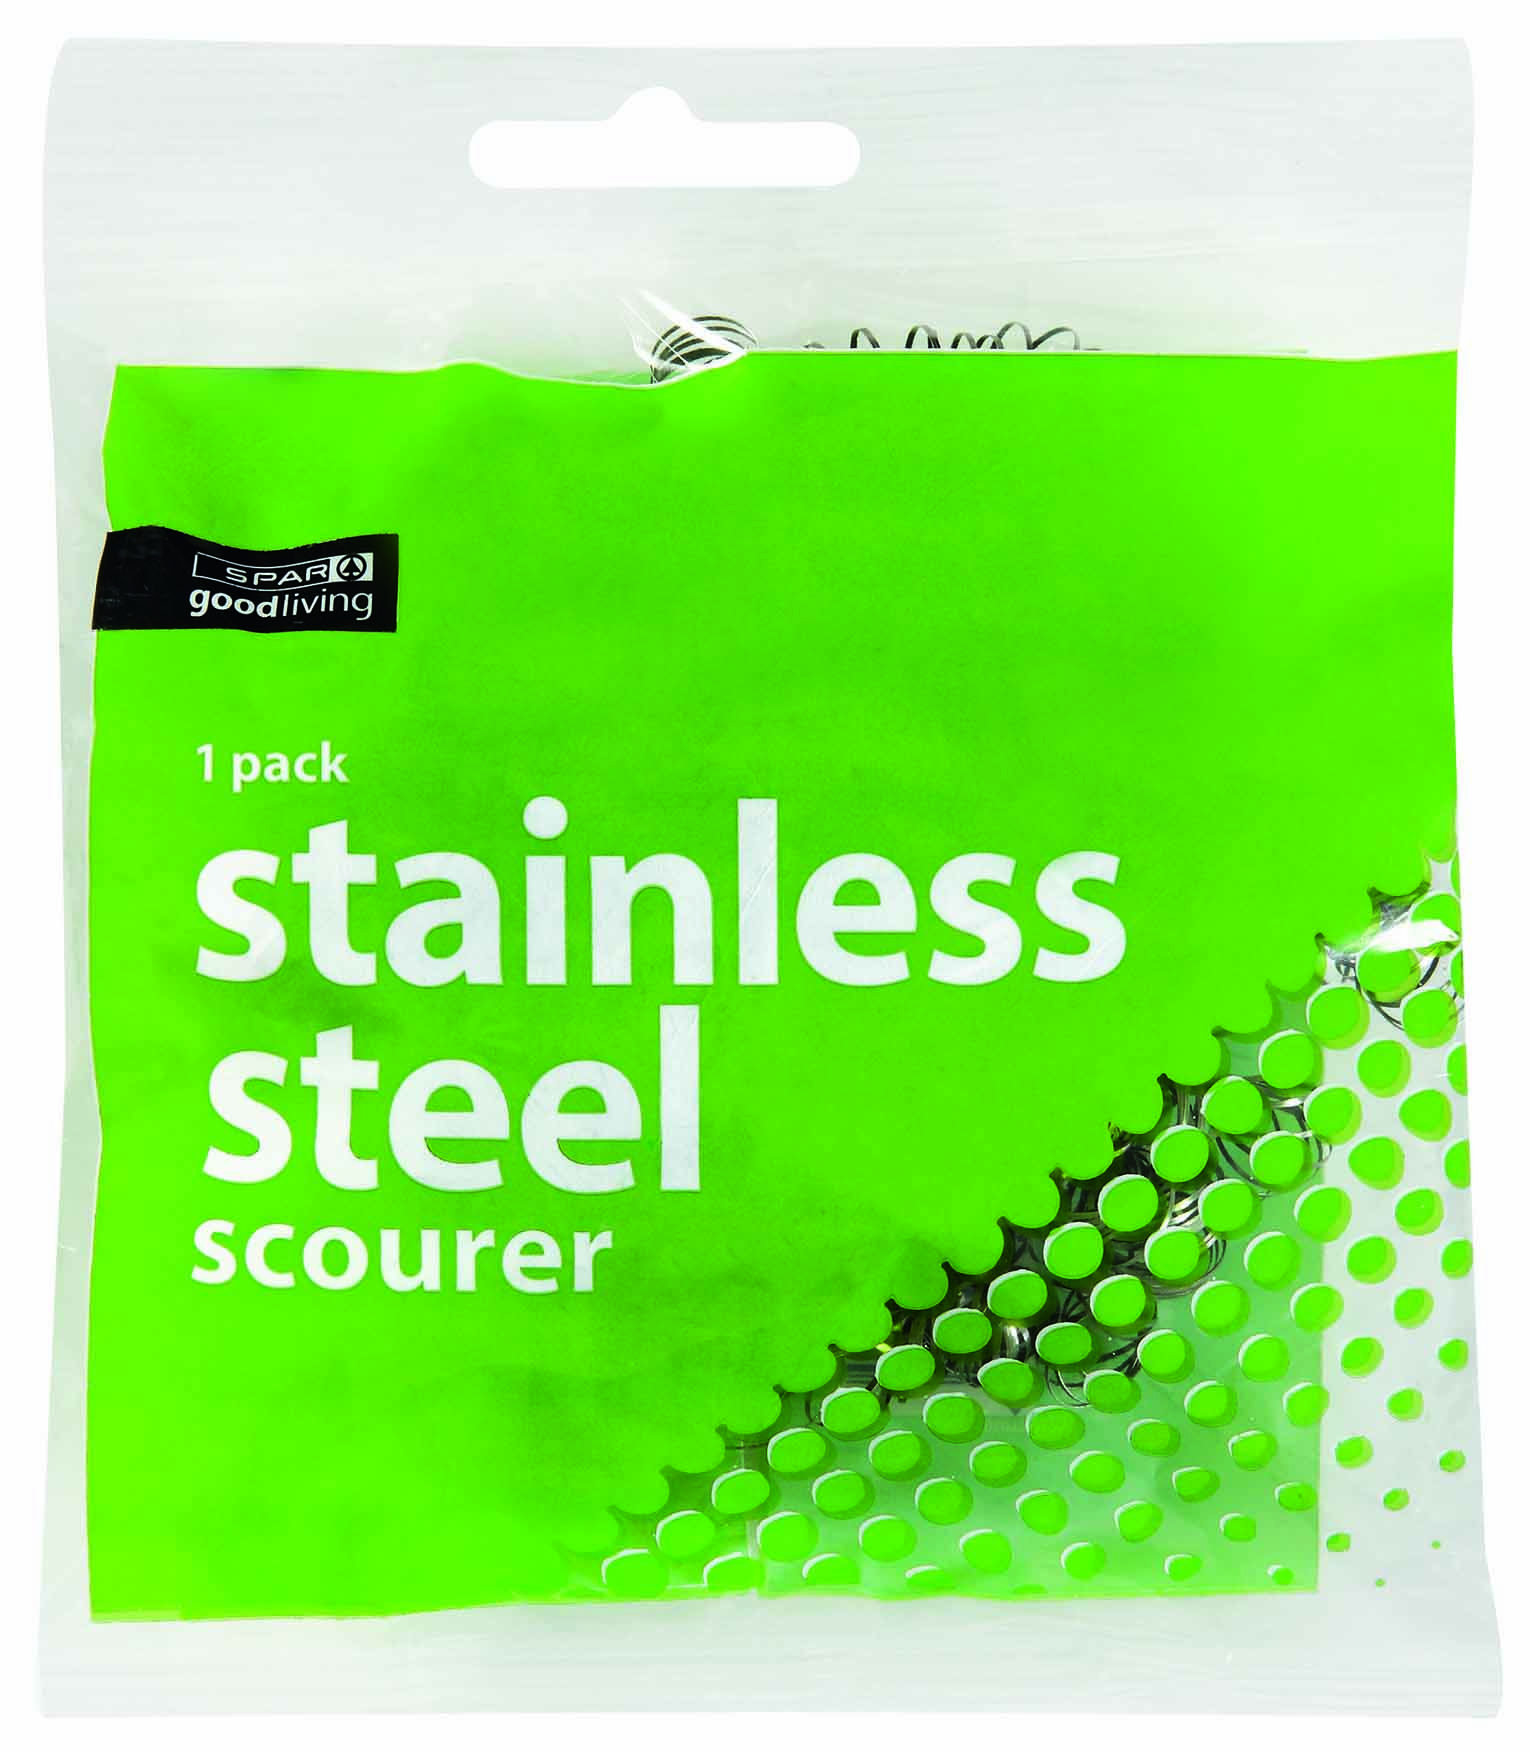 scourer stainless steel - 1 pack